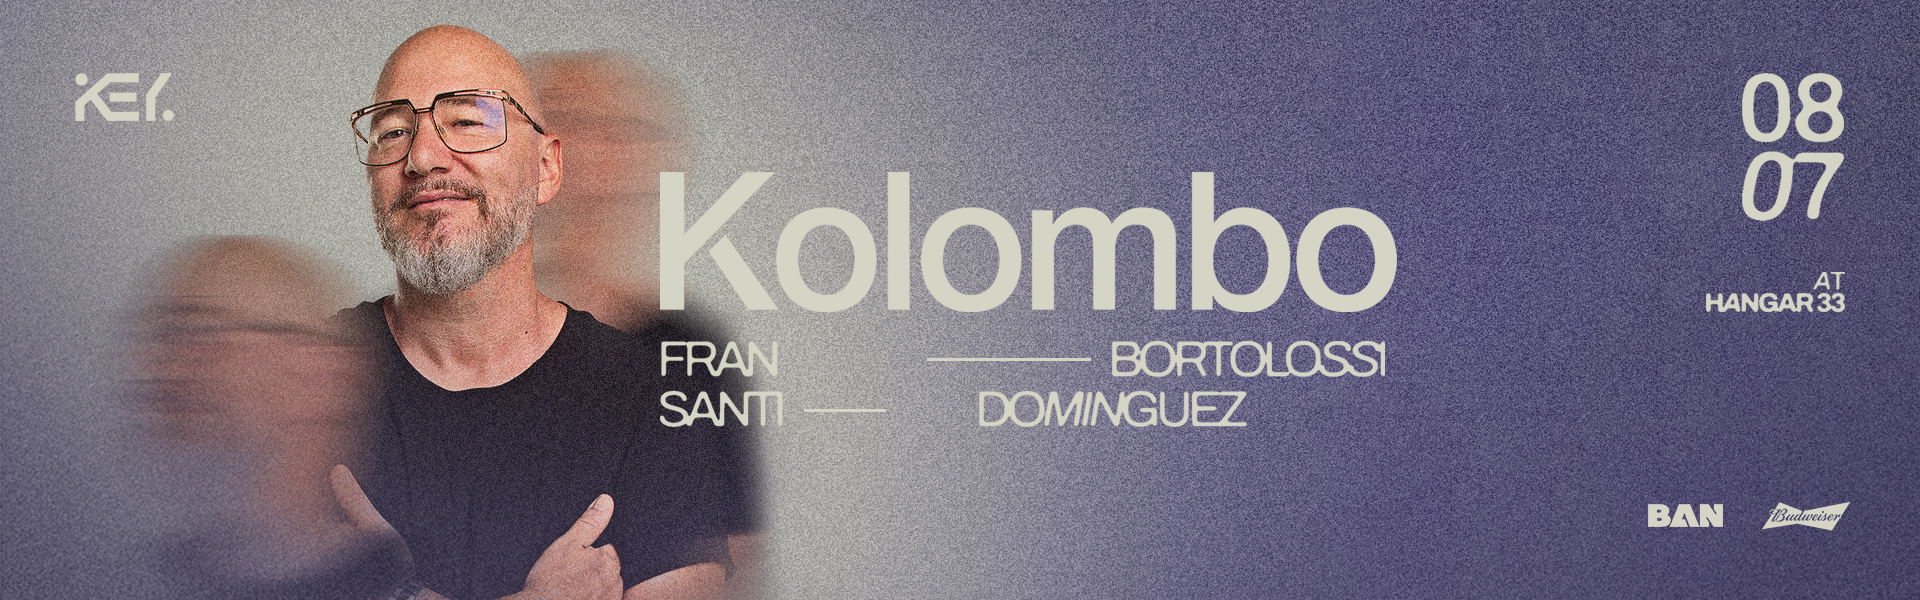 Flyer Key Presenta Kolombo 